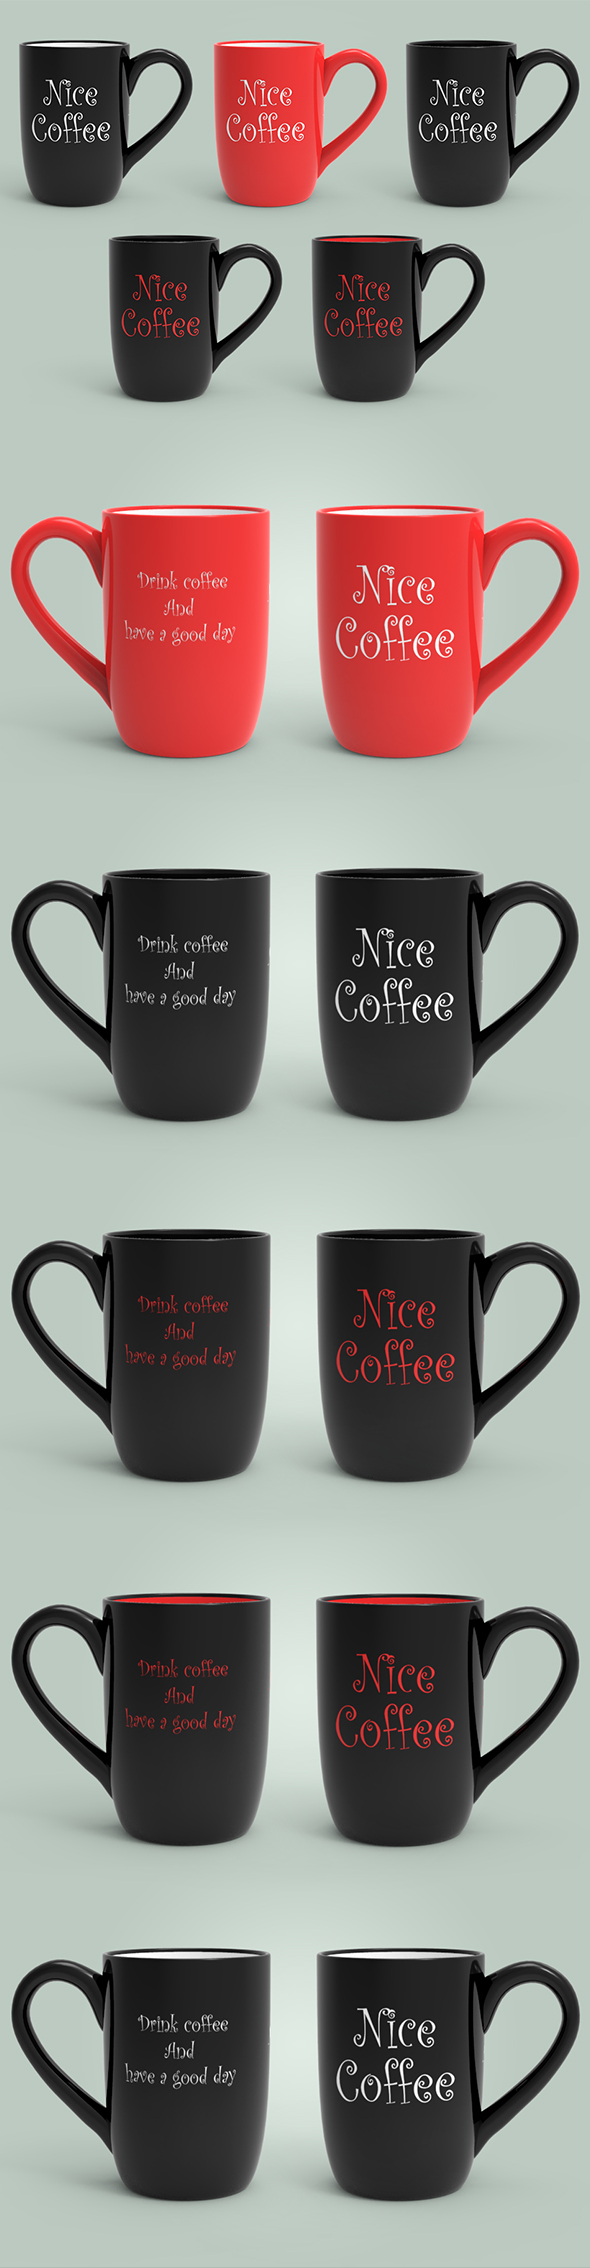 Nice Coffee Cup - 3Docean 25363311